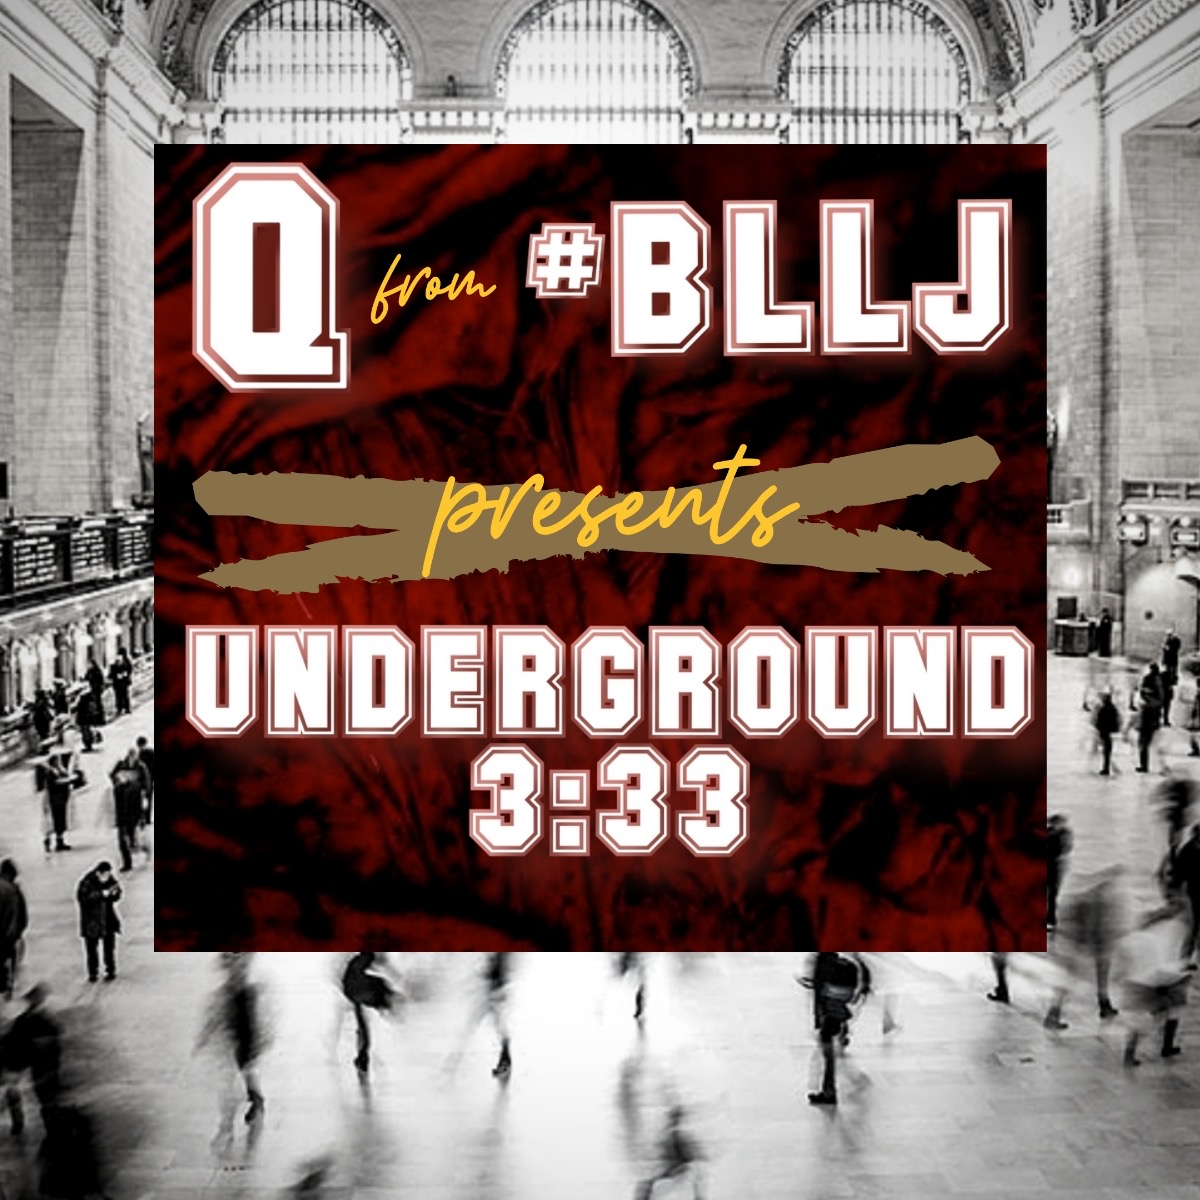 BLLJ: Underground 333 Vendors Market